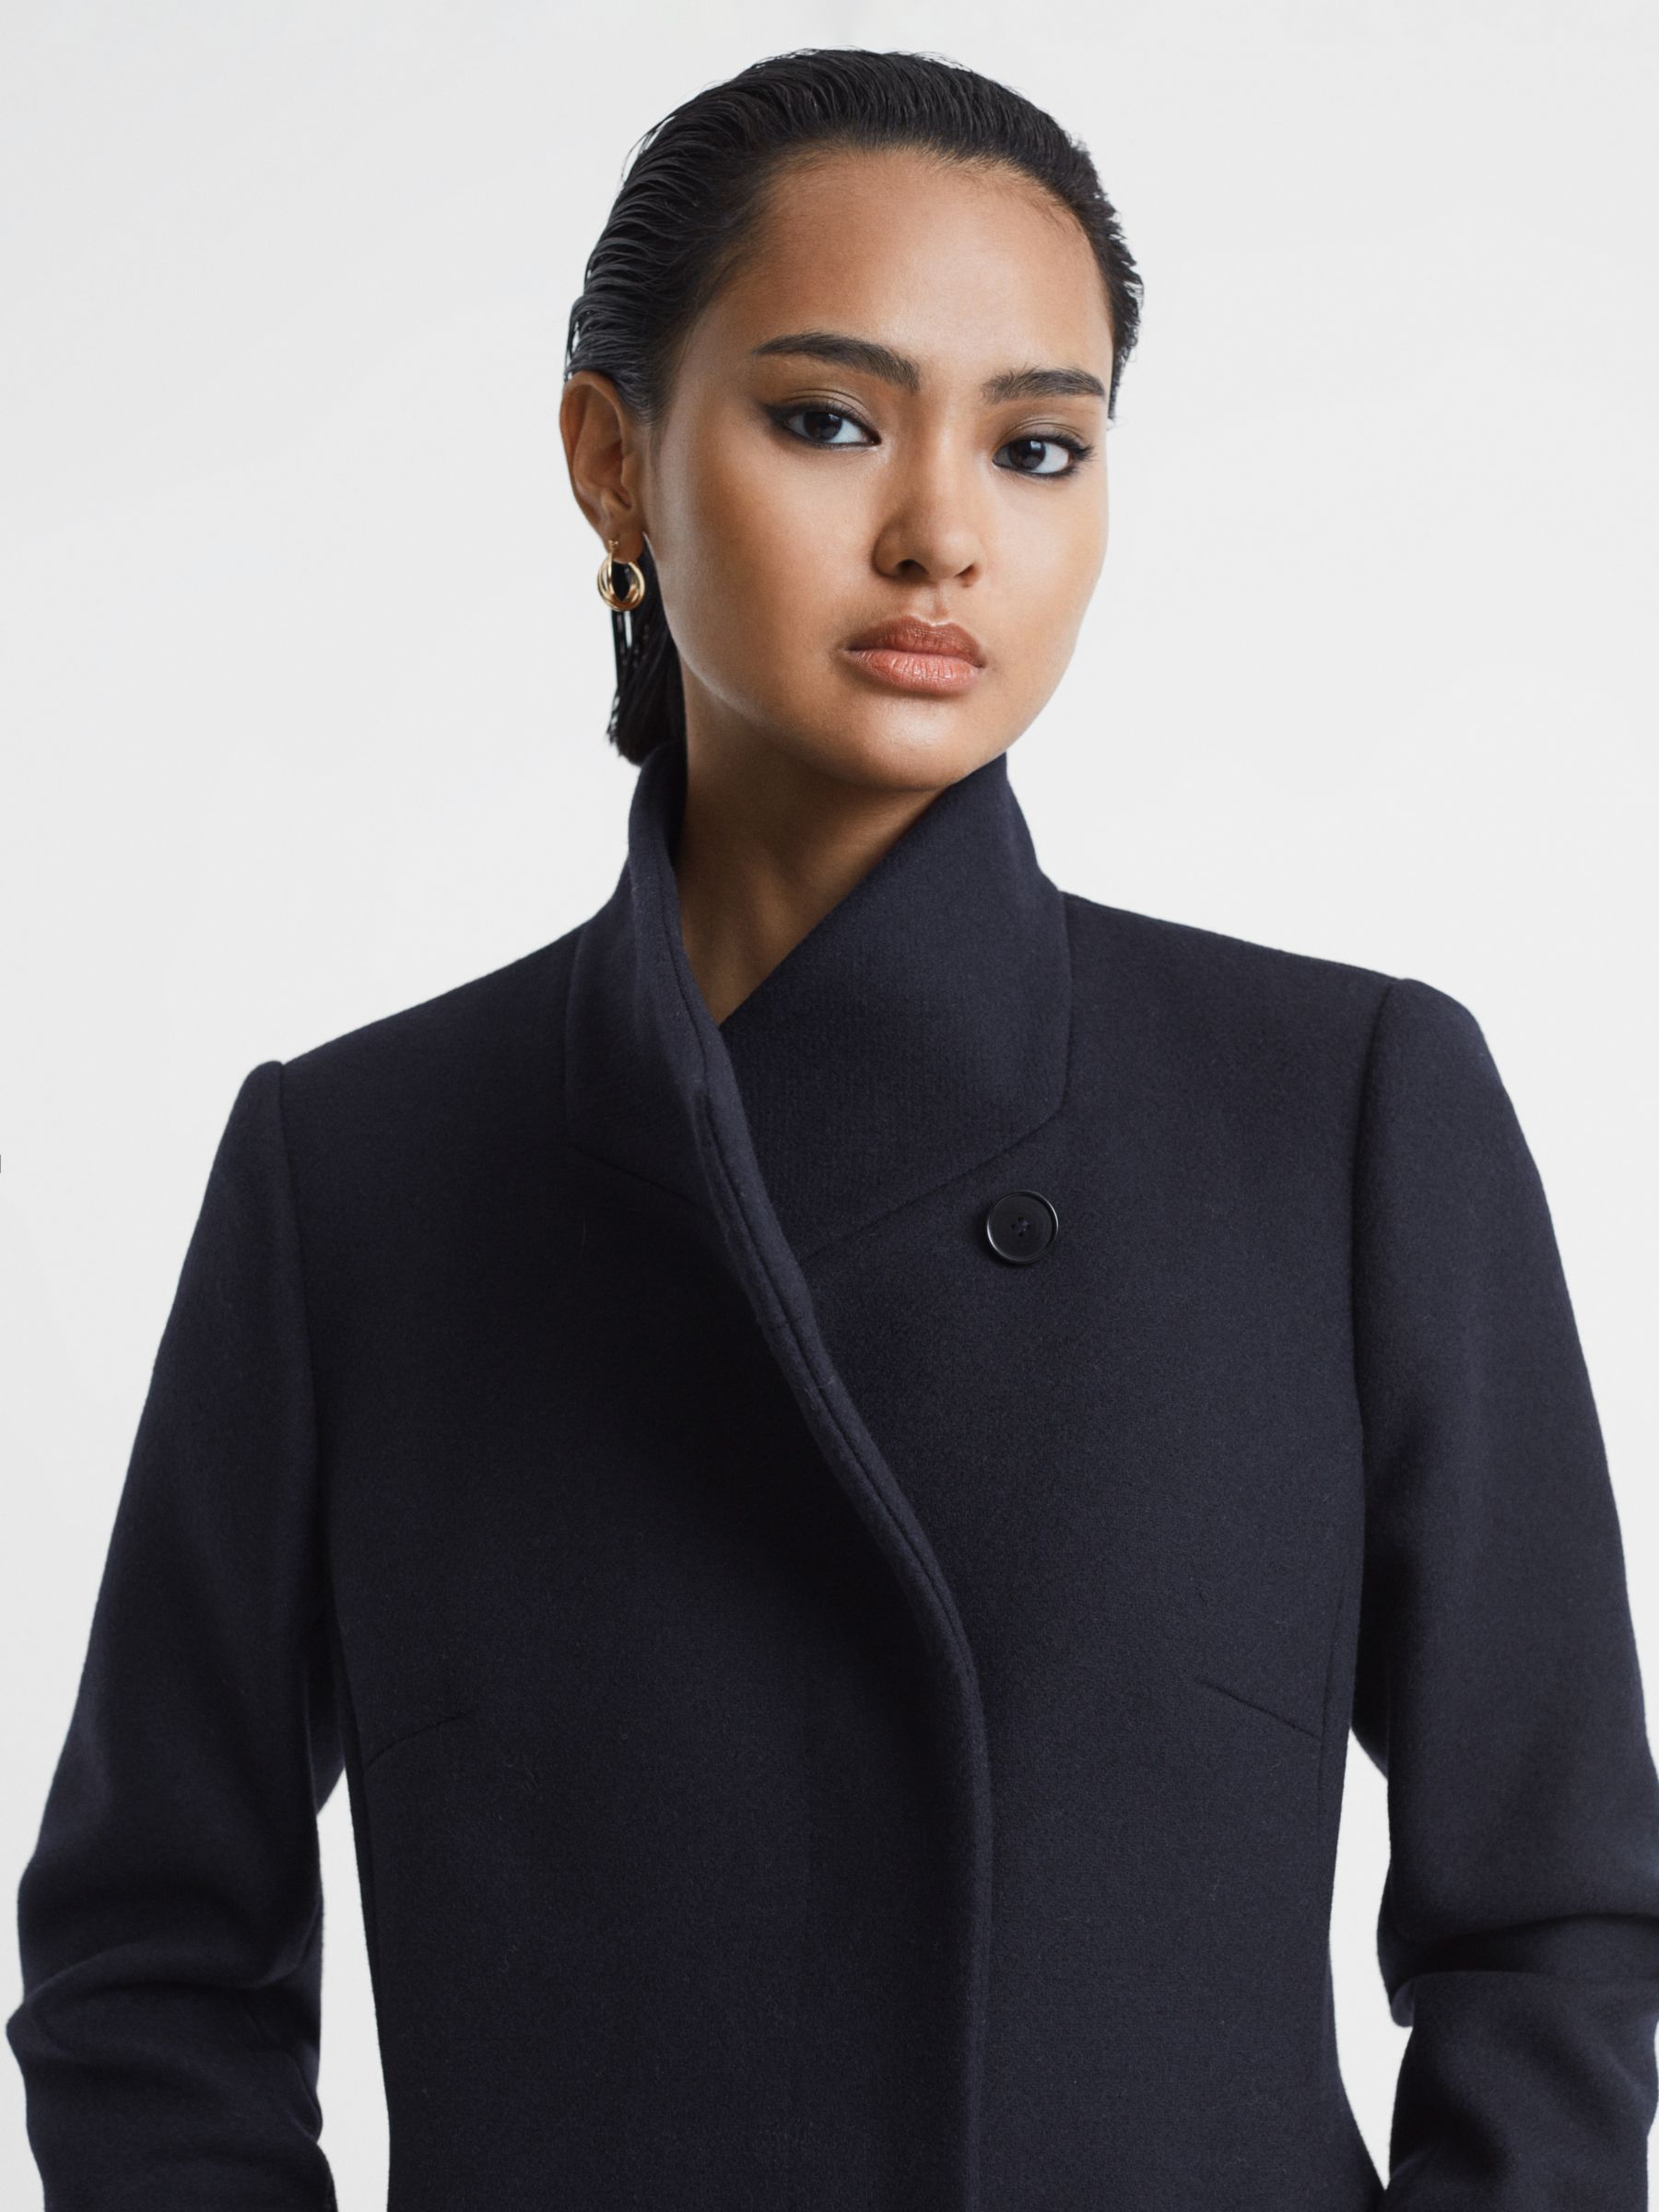 Reiss Mia Wool Blend Tailored Coat, Navy at John Lewis & Partners